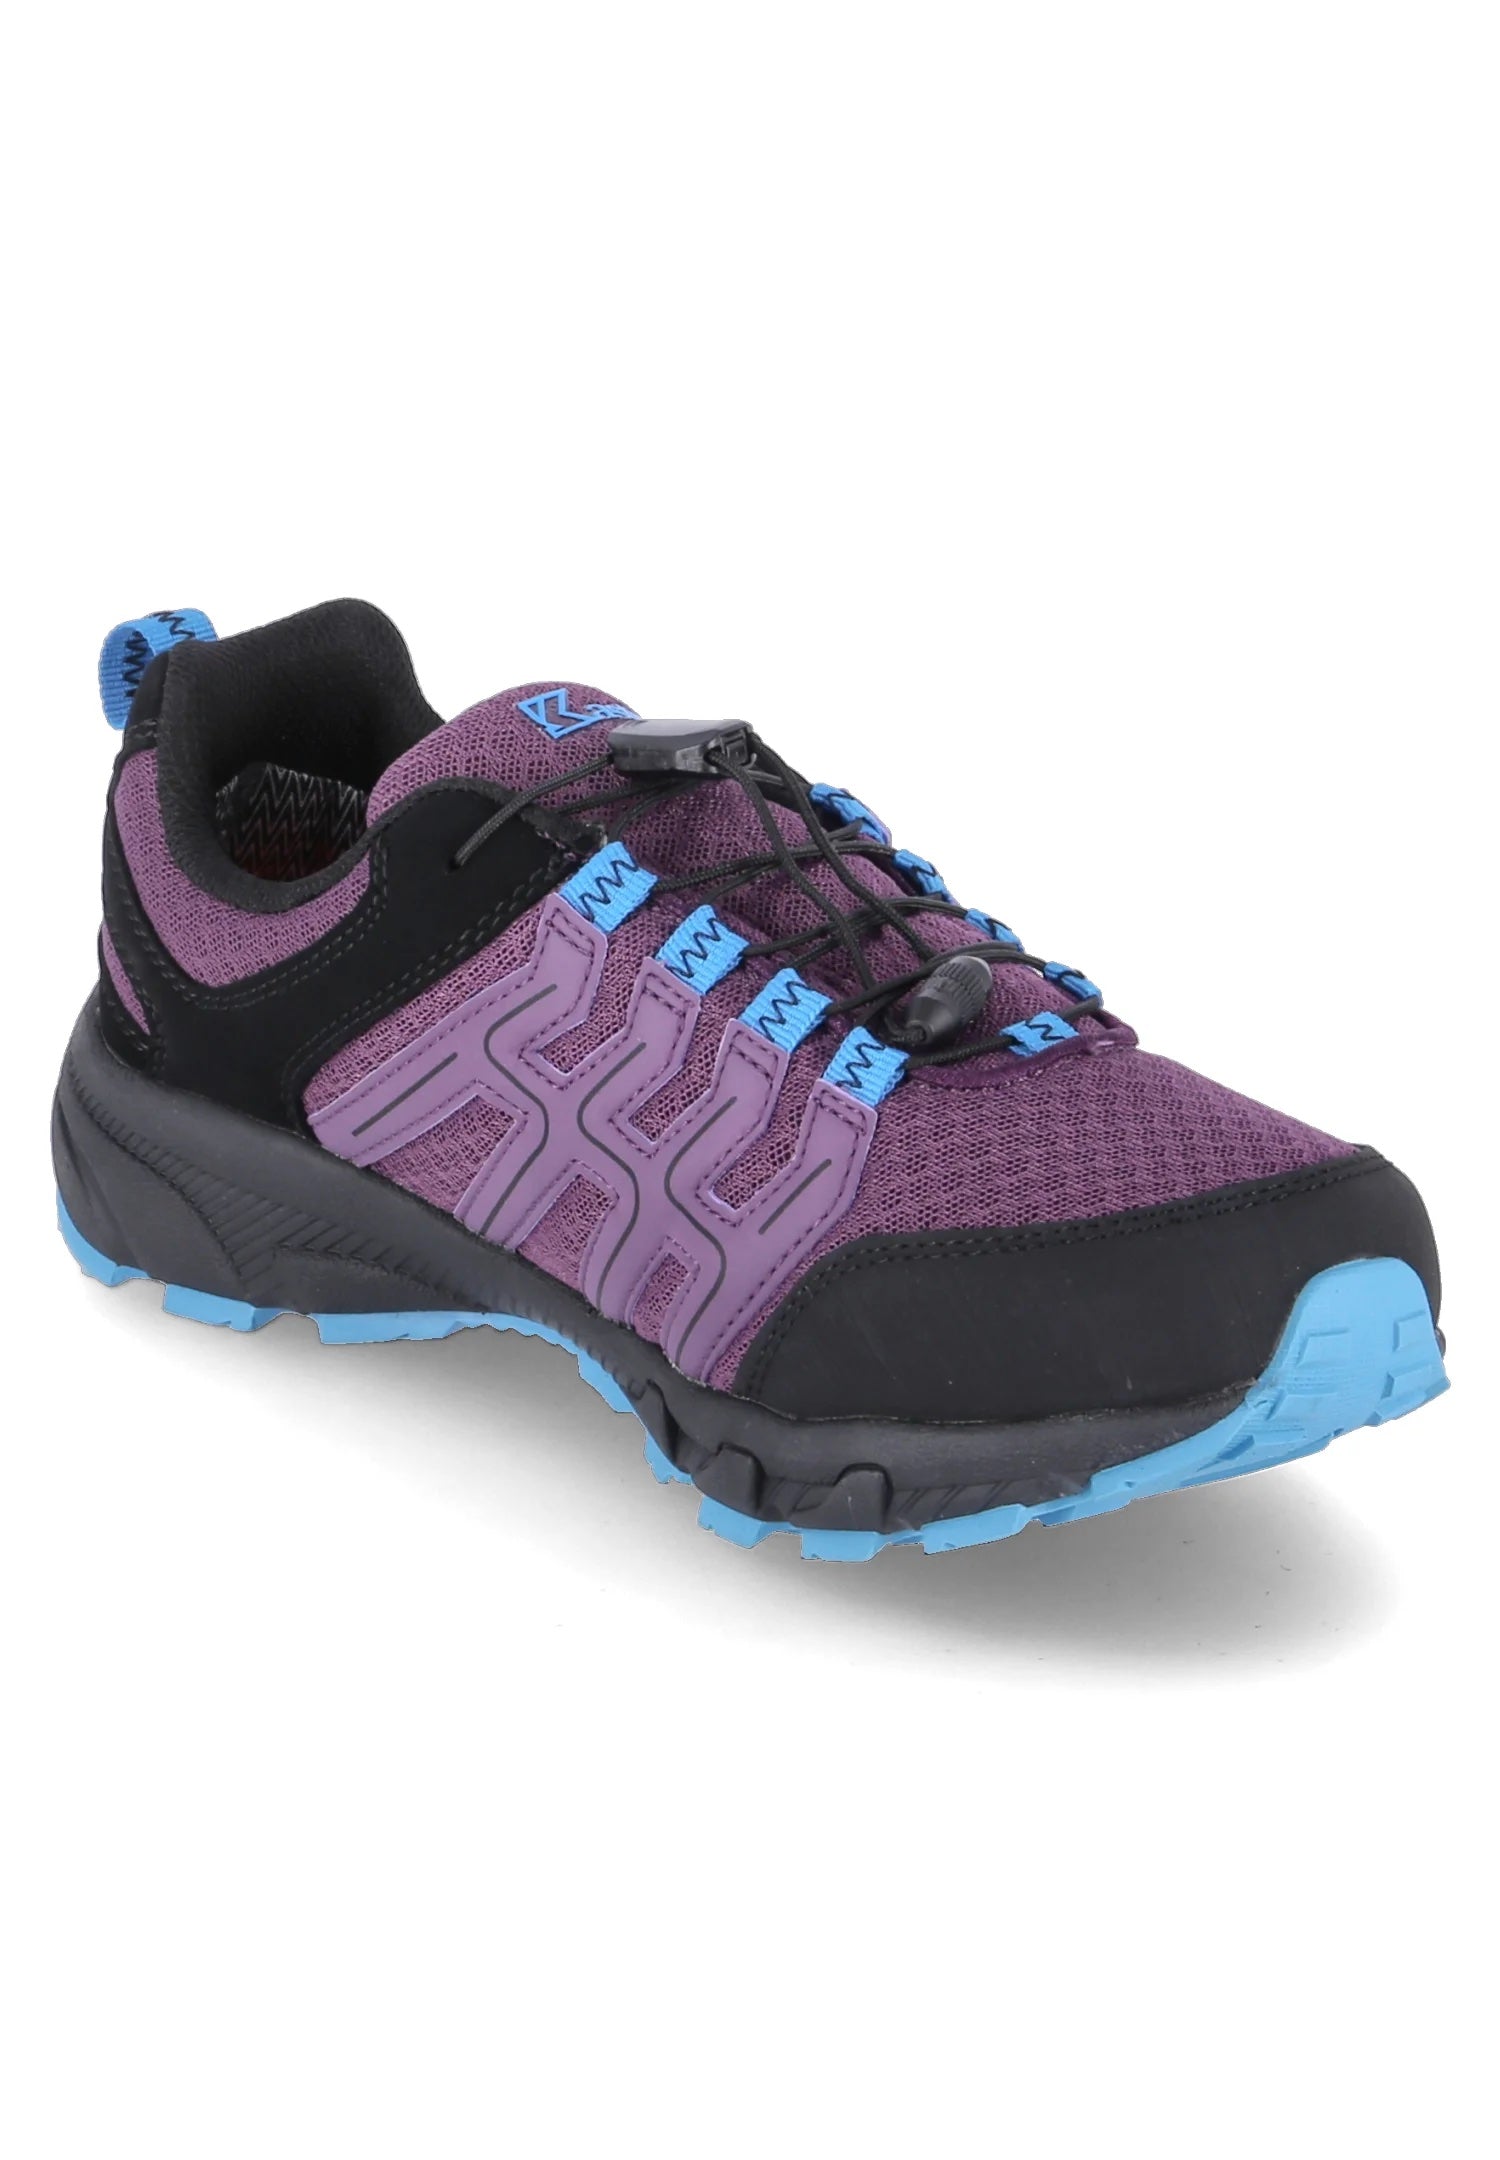 Kastinger Damen Trailrunning Schuh purple 22350